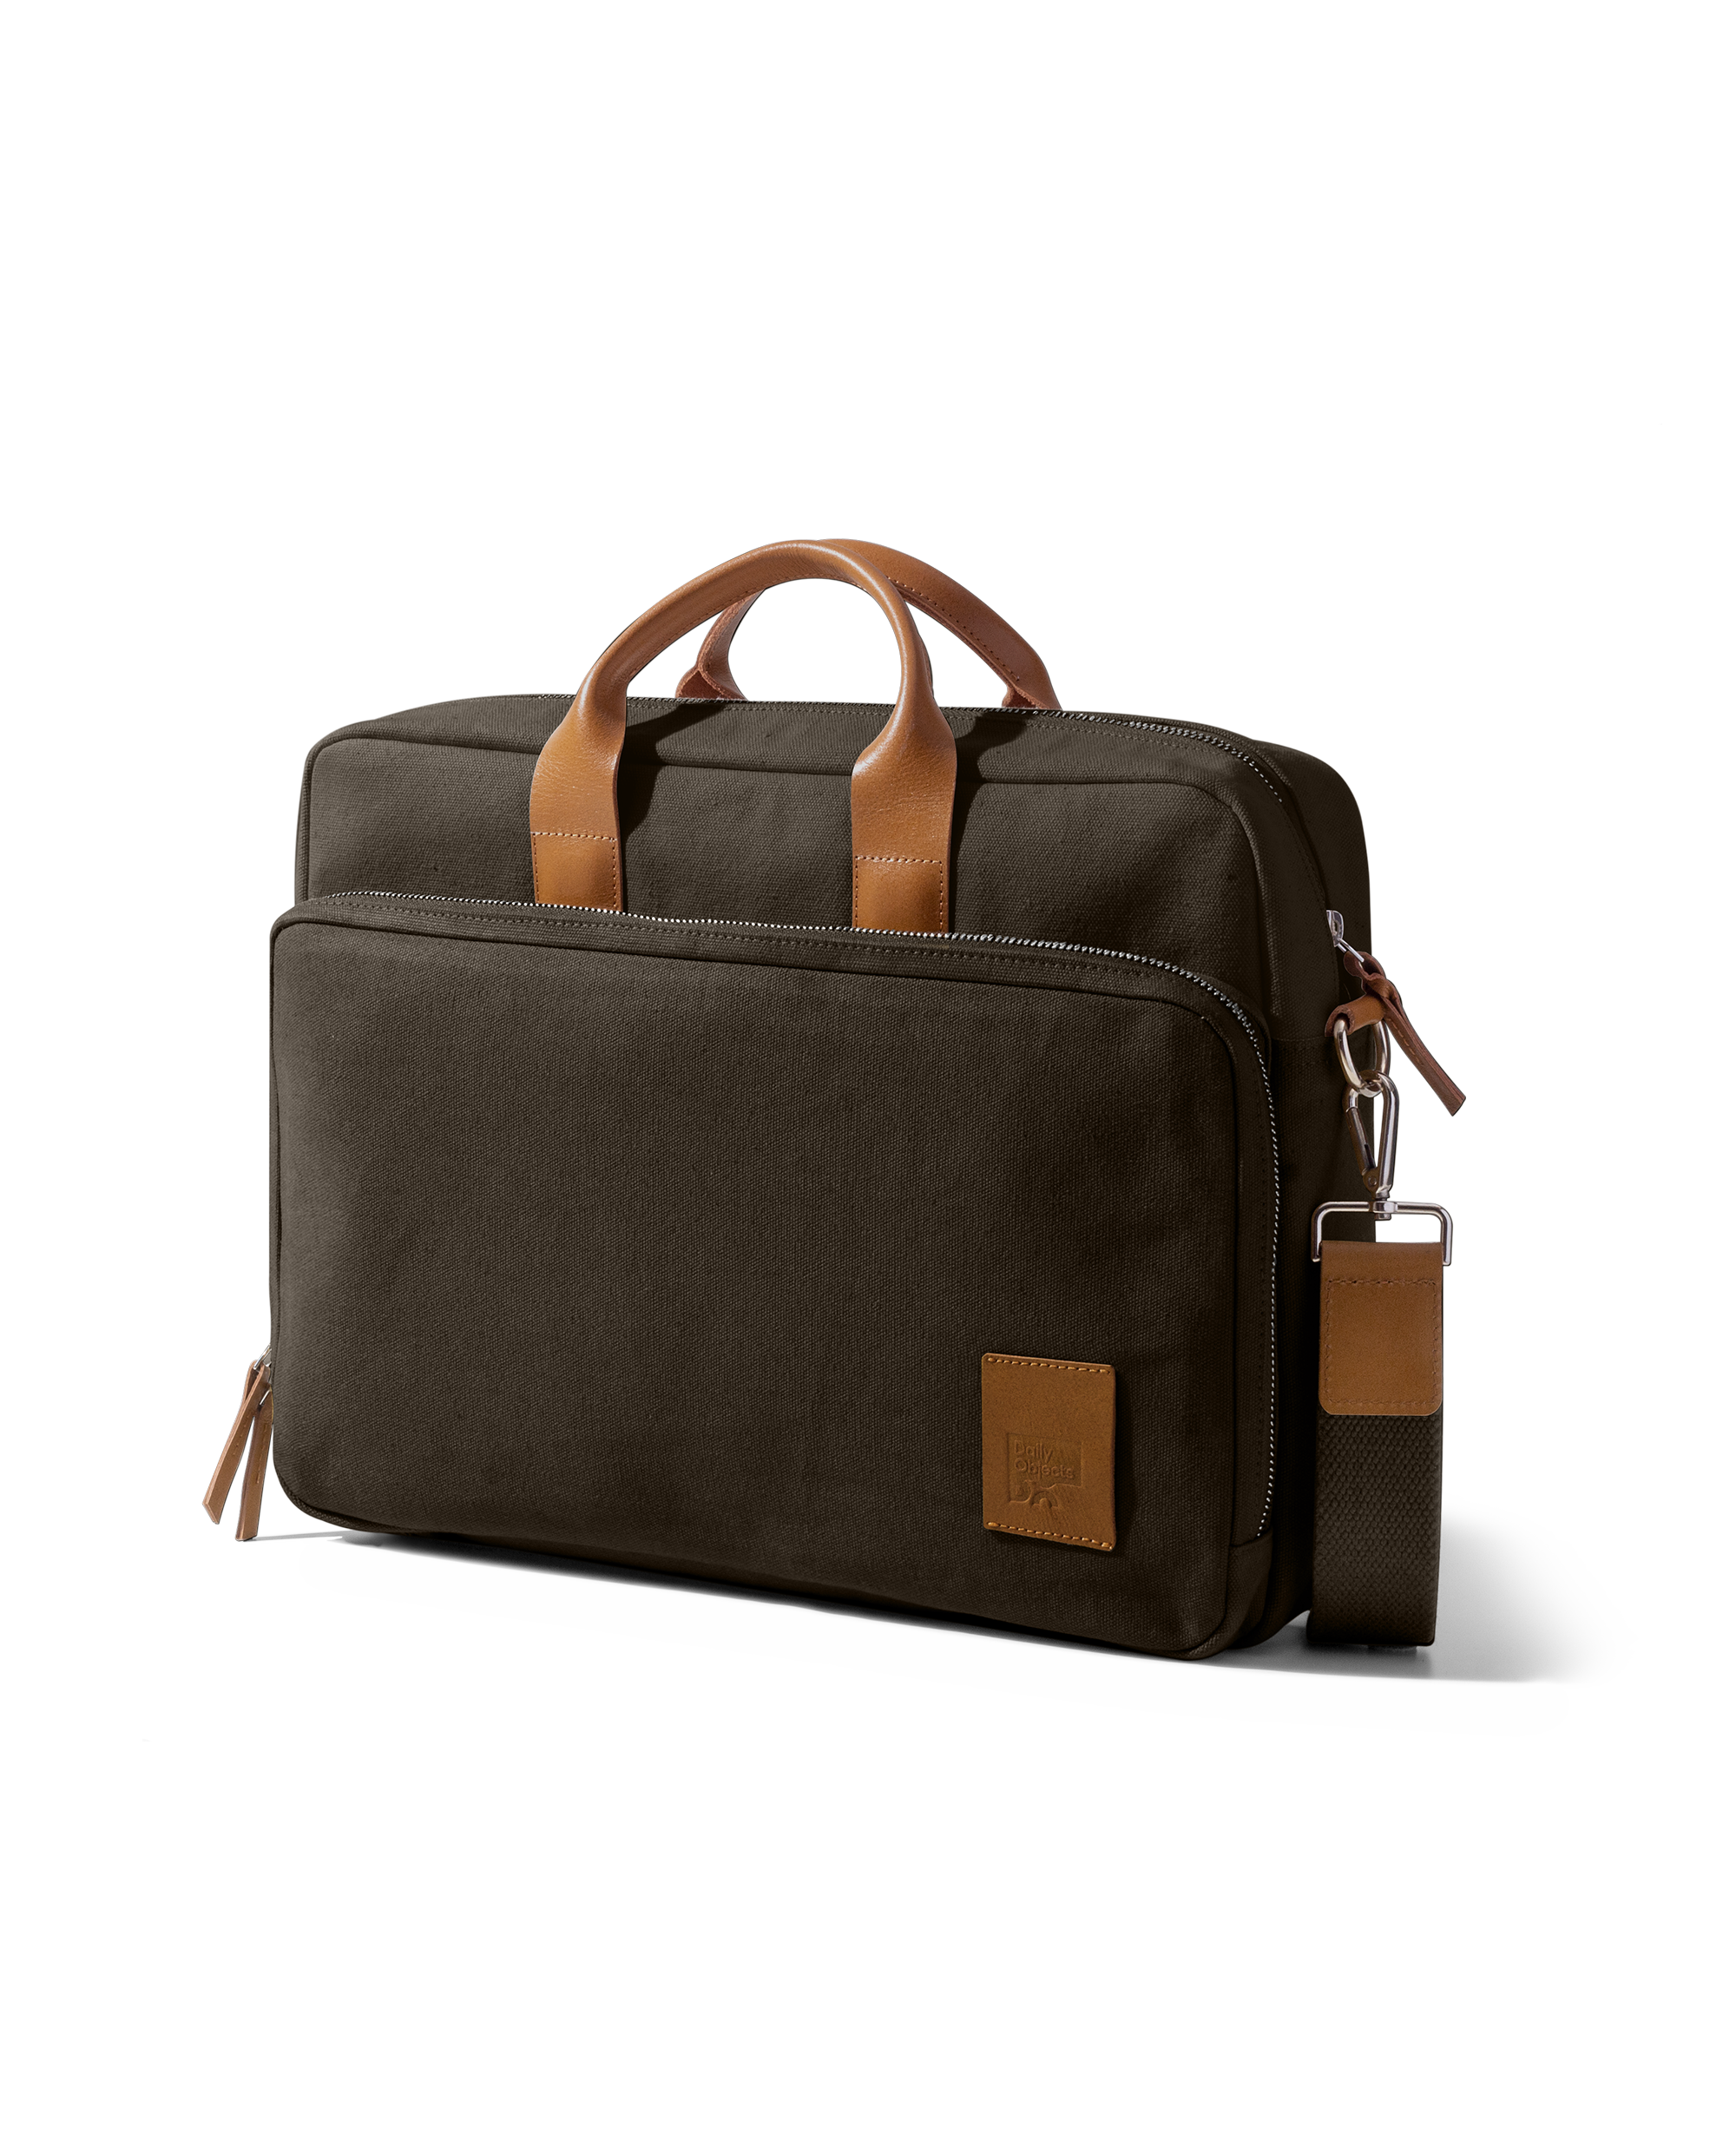 Jupiter - Laptop Bag | Vegan Leather Bag